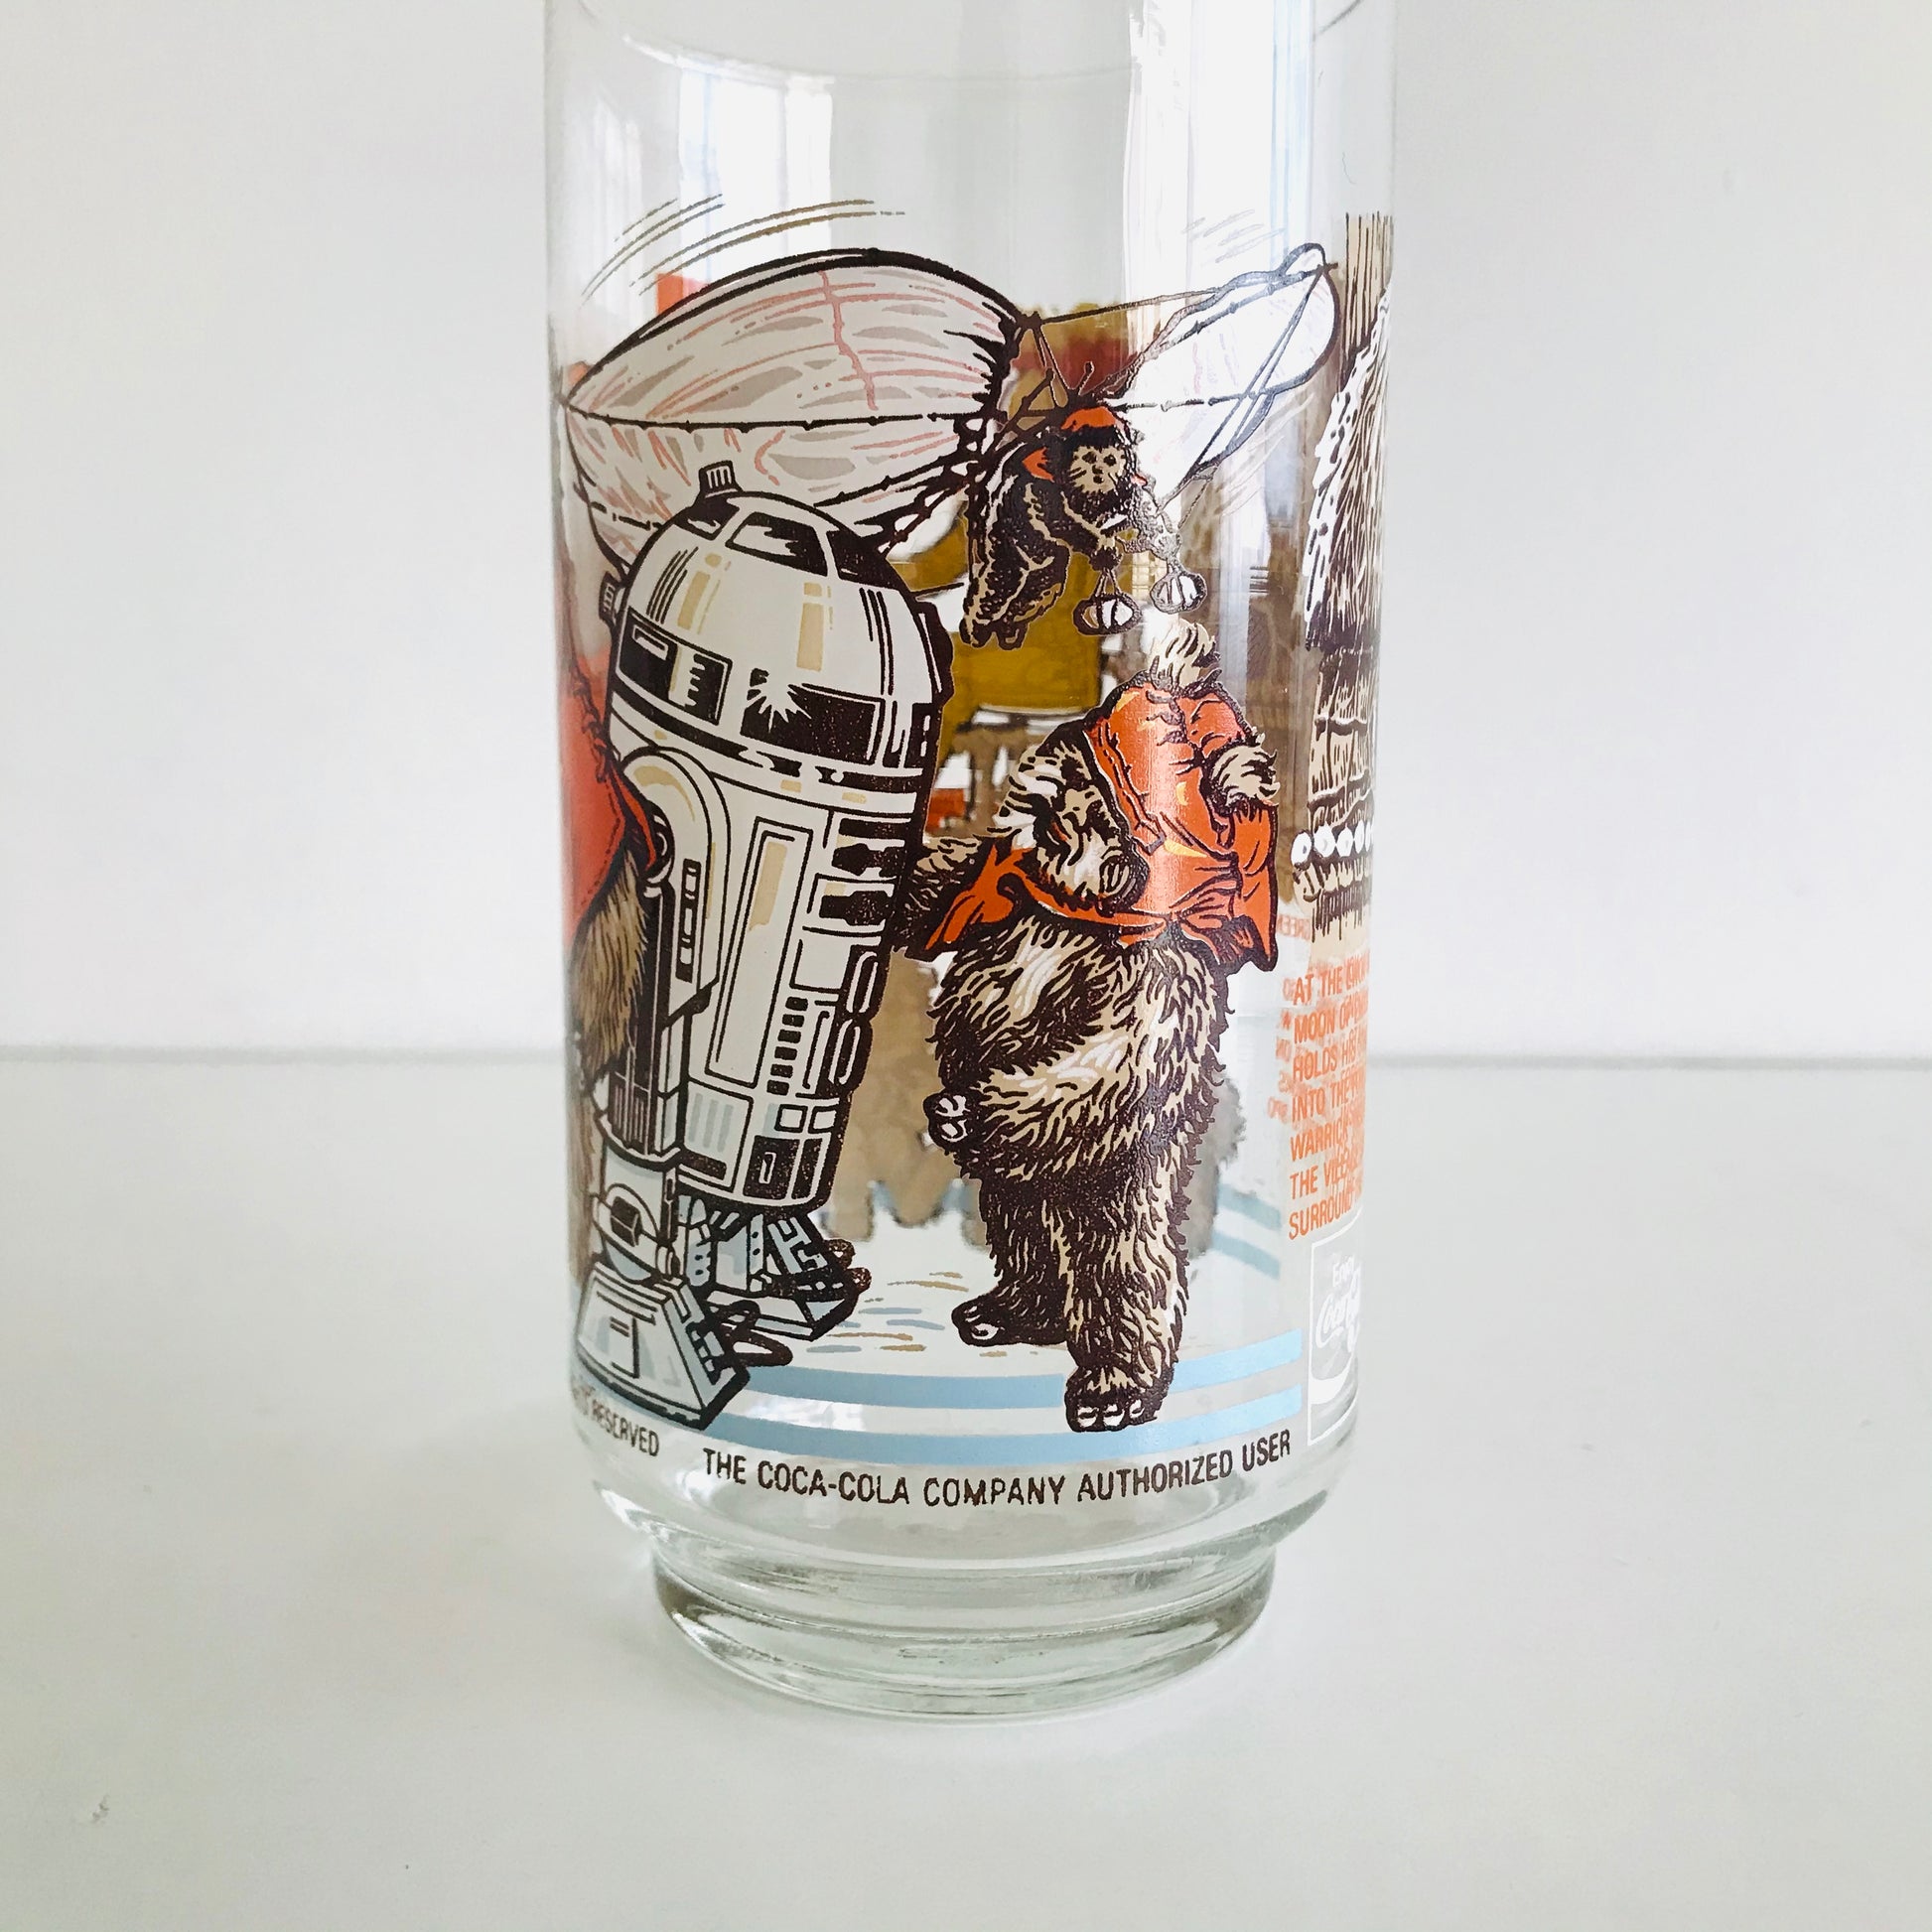 Soda Cup With Straw Star Wars Ep7 R2Dr Zak #Stwv-R162